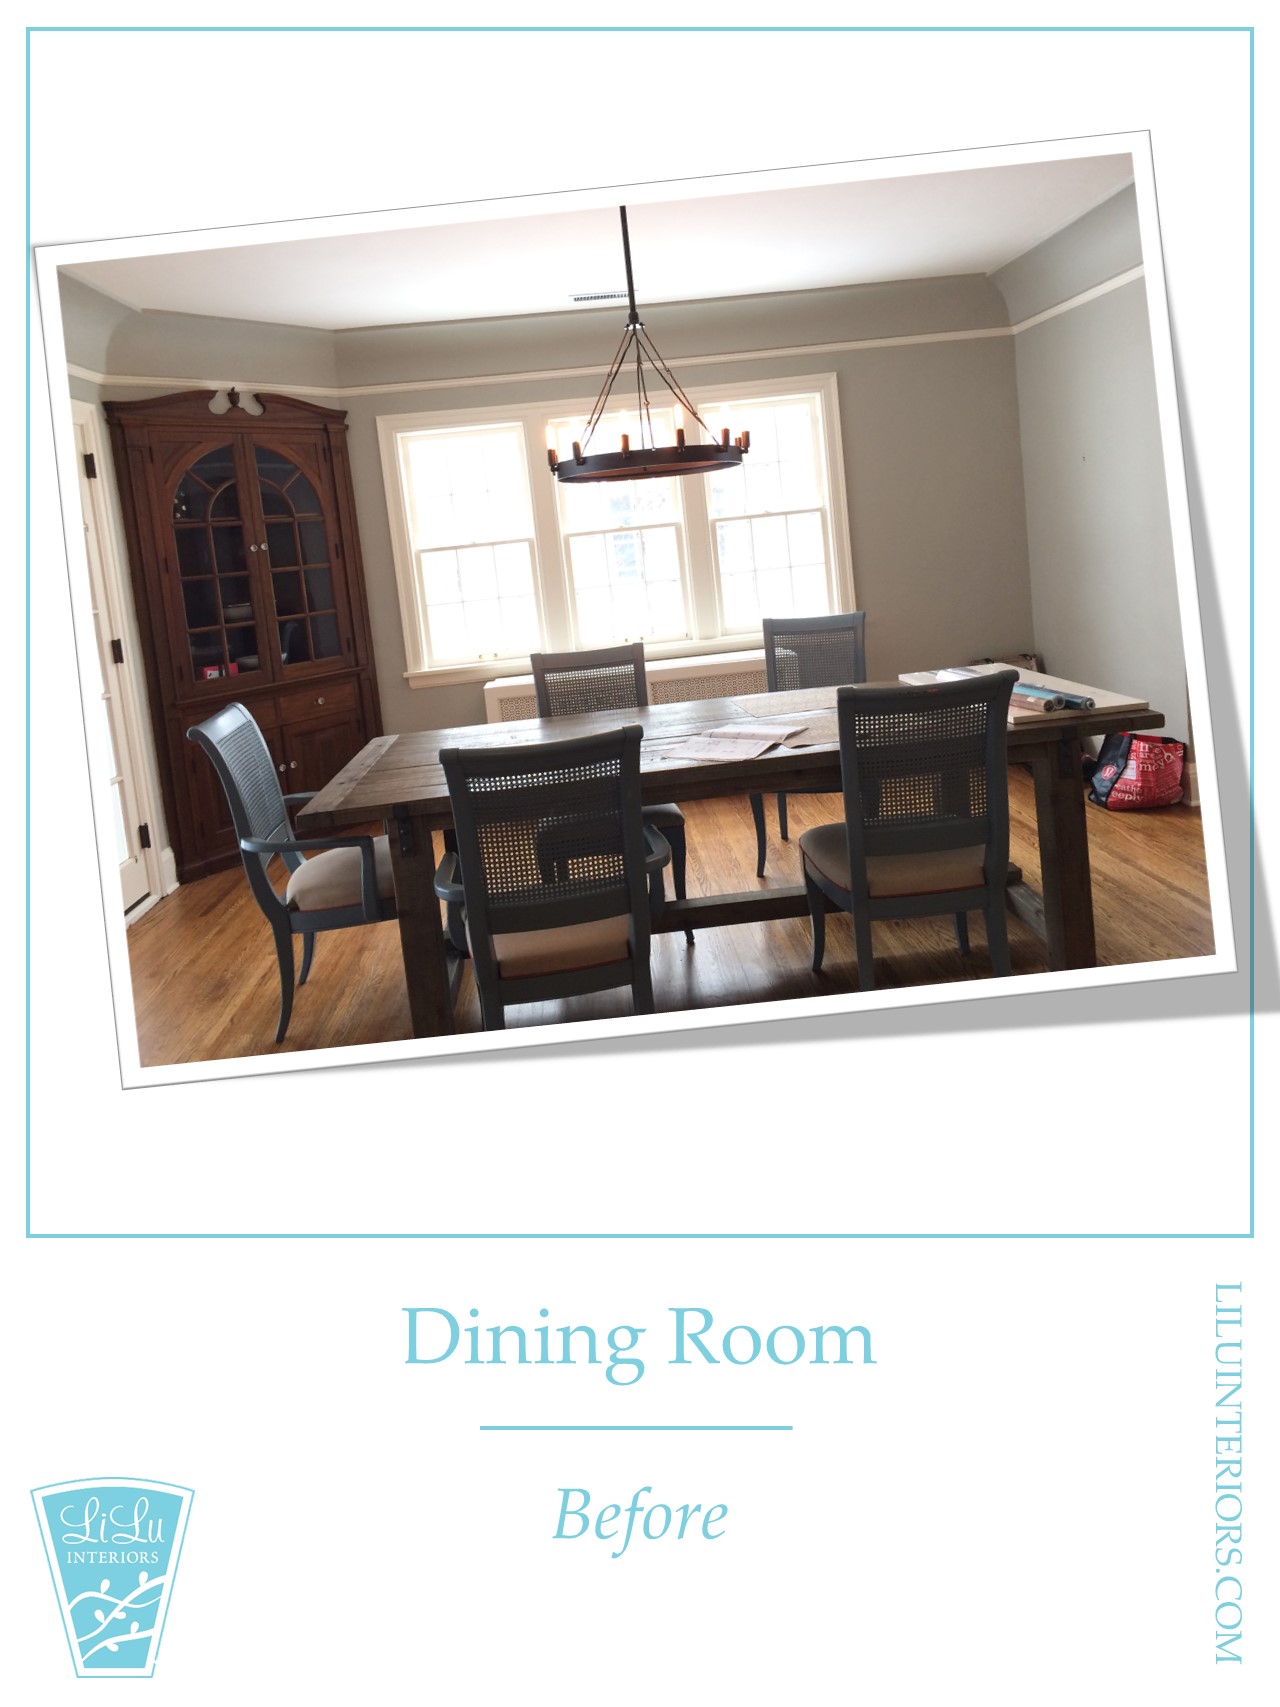 Edina-Dining-Room-Before-Minneapolis-interior-designer-55405.jpg